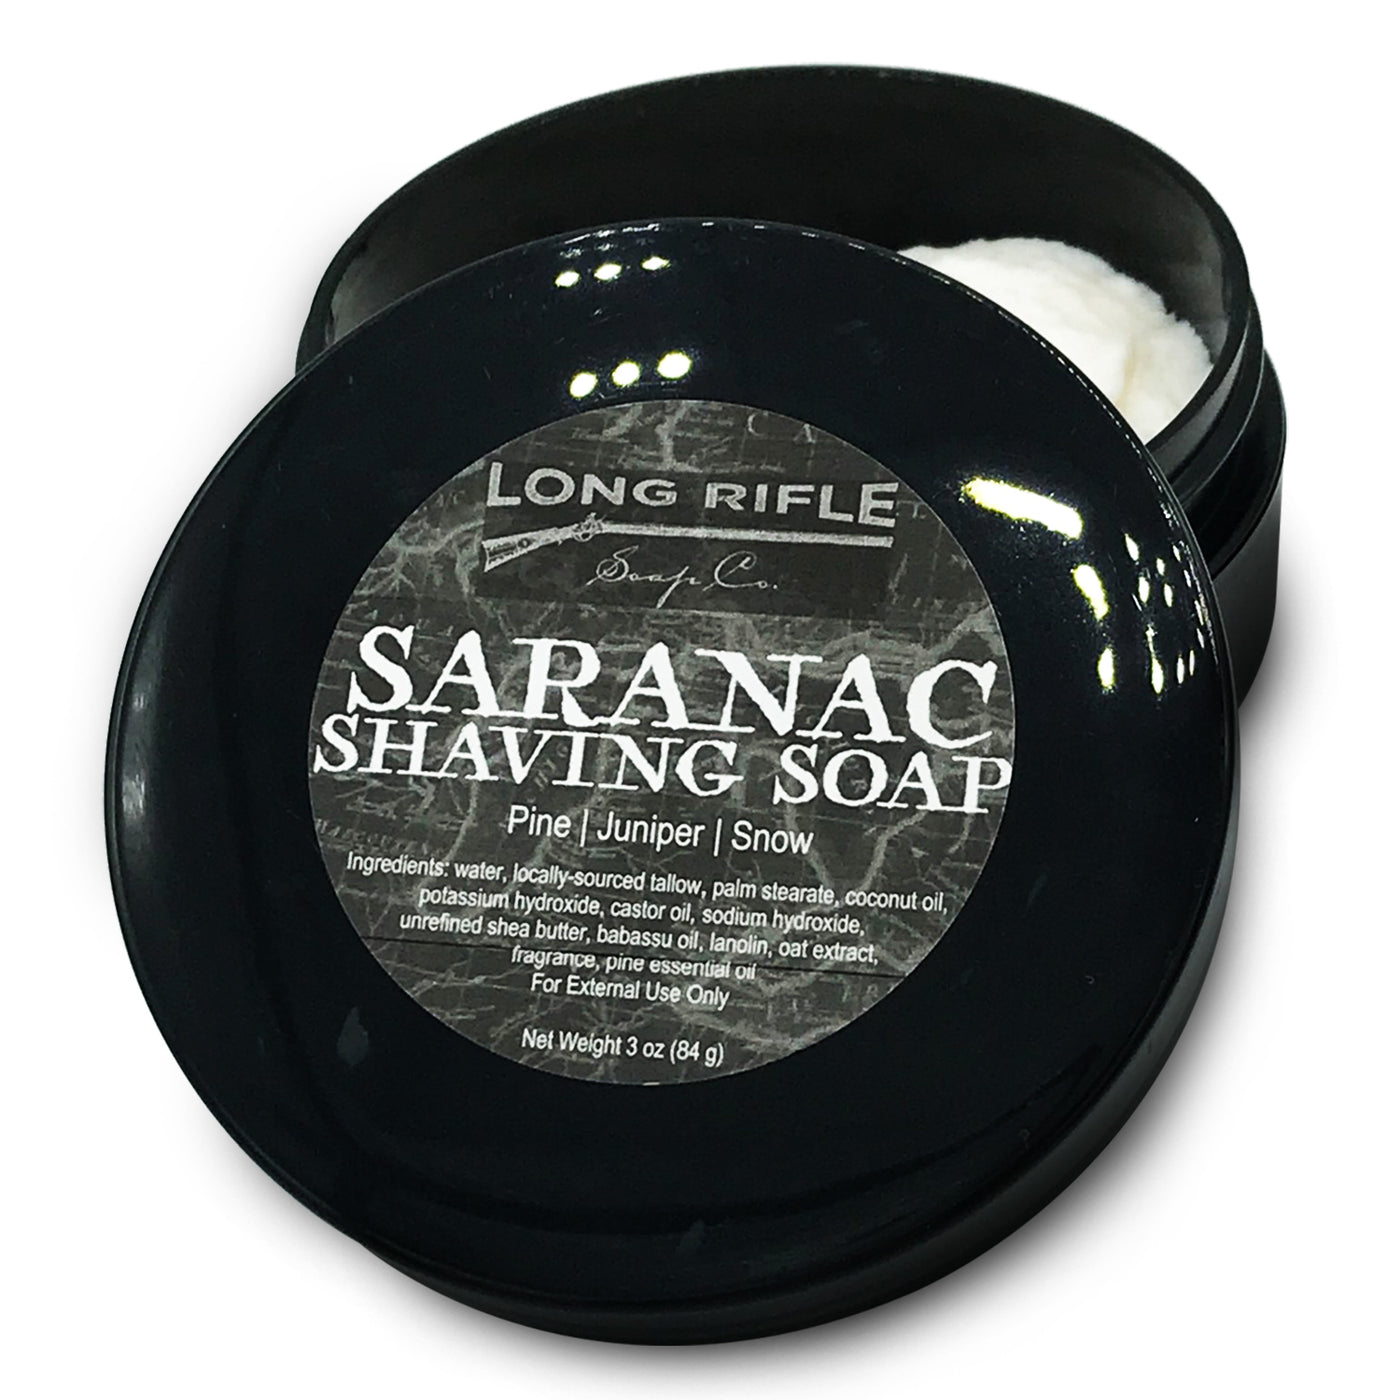  Saranac Shaving Soap by Long Rifle sold by Naked Armor Razors